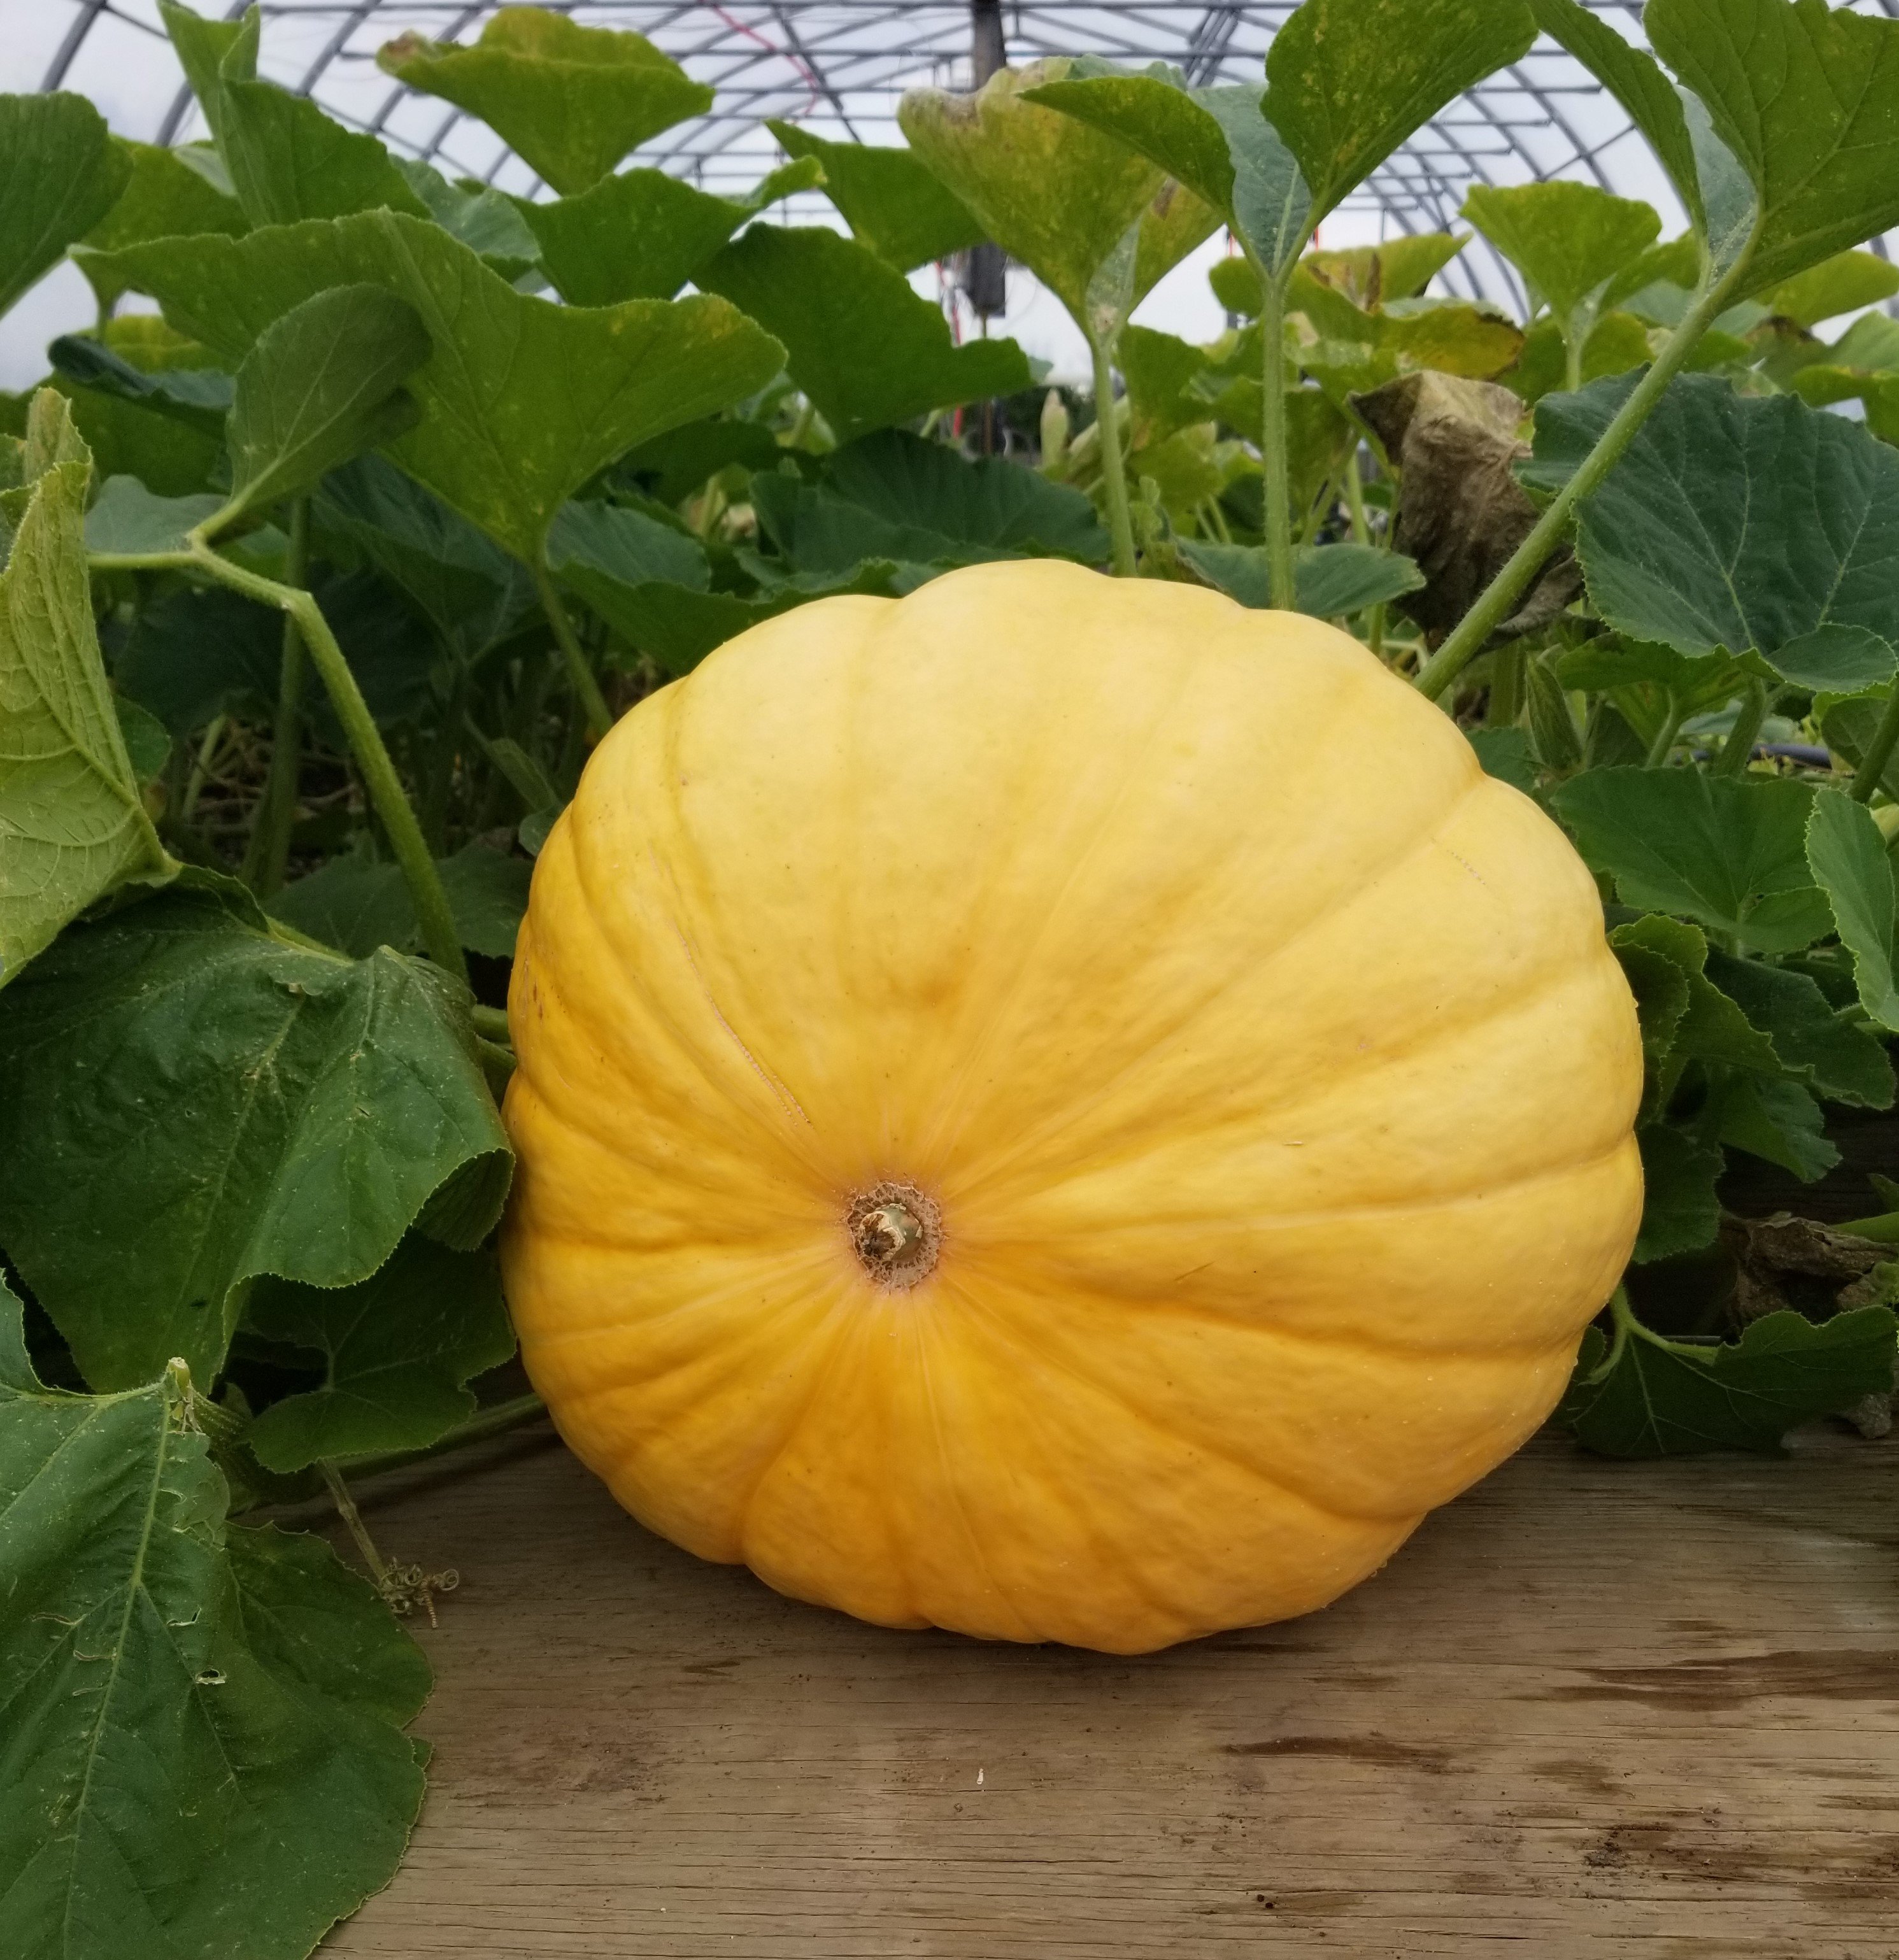 Next Happening: Large Pumpkin!